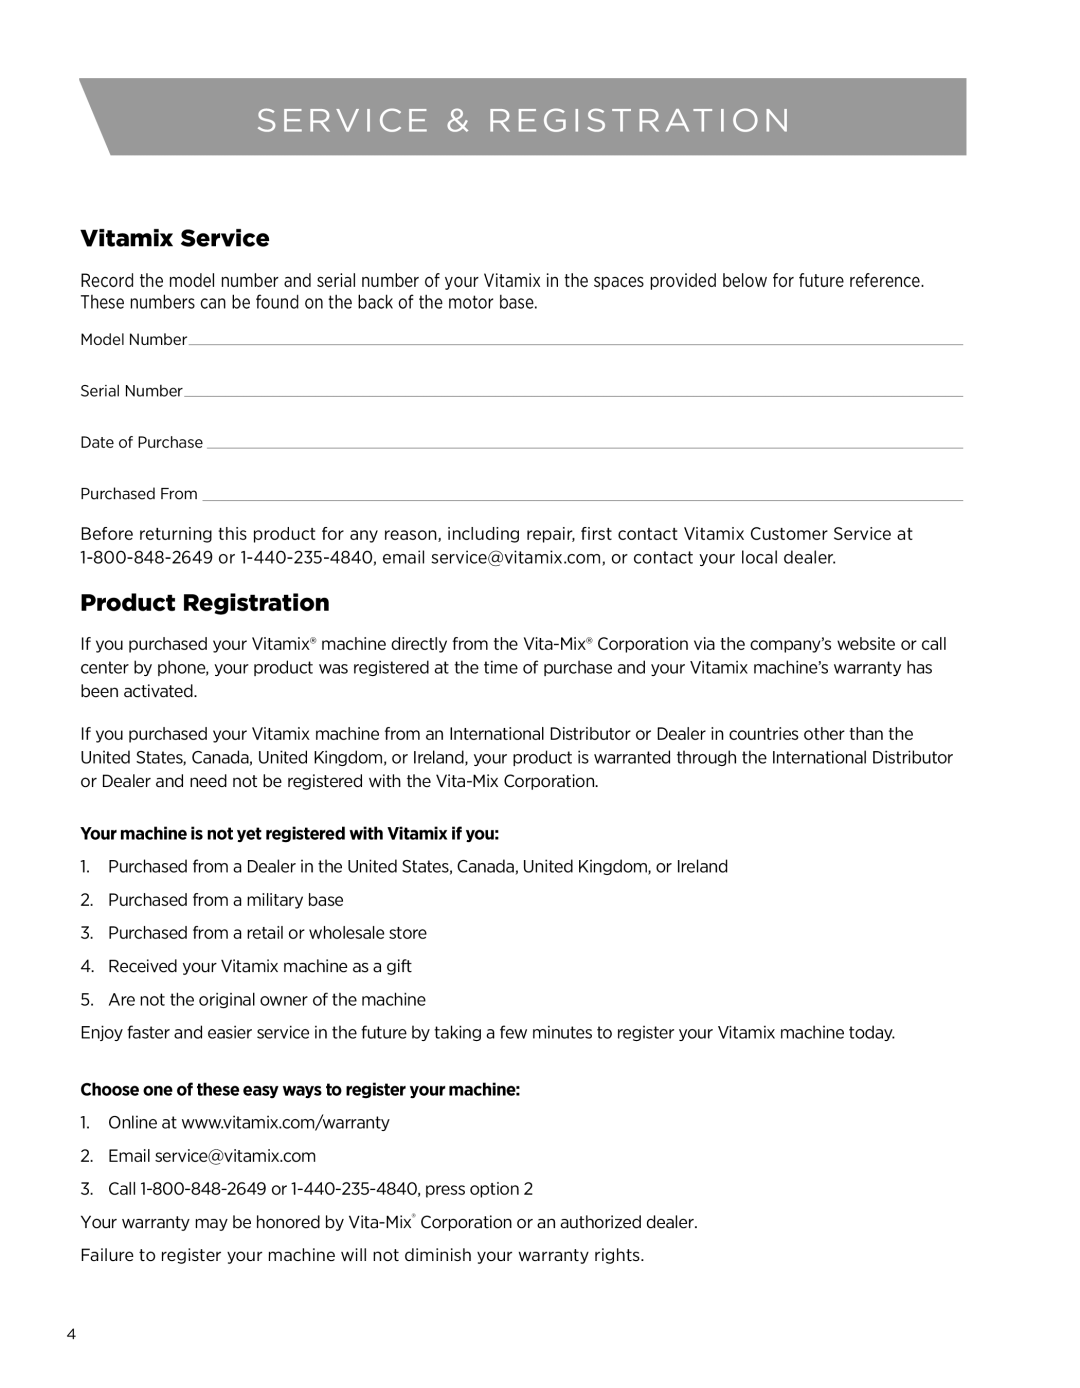 Vita-Mix 7500 owner manual Service & Registration, Vitamix Service, Product Registration 